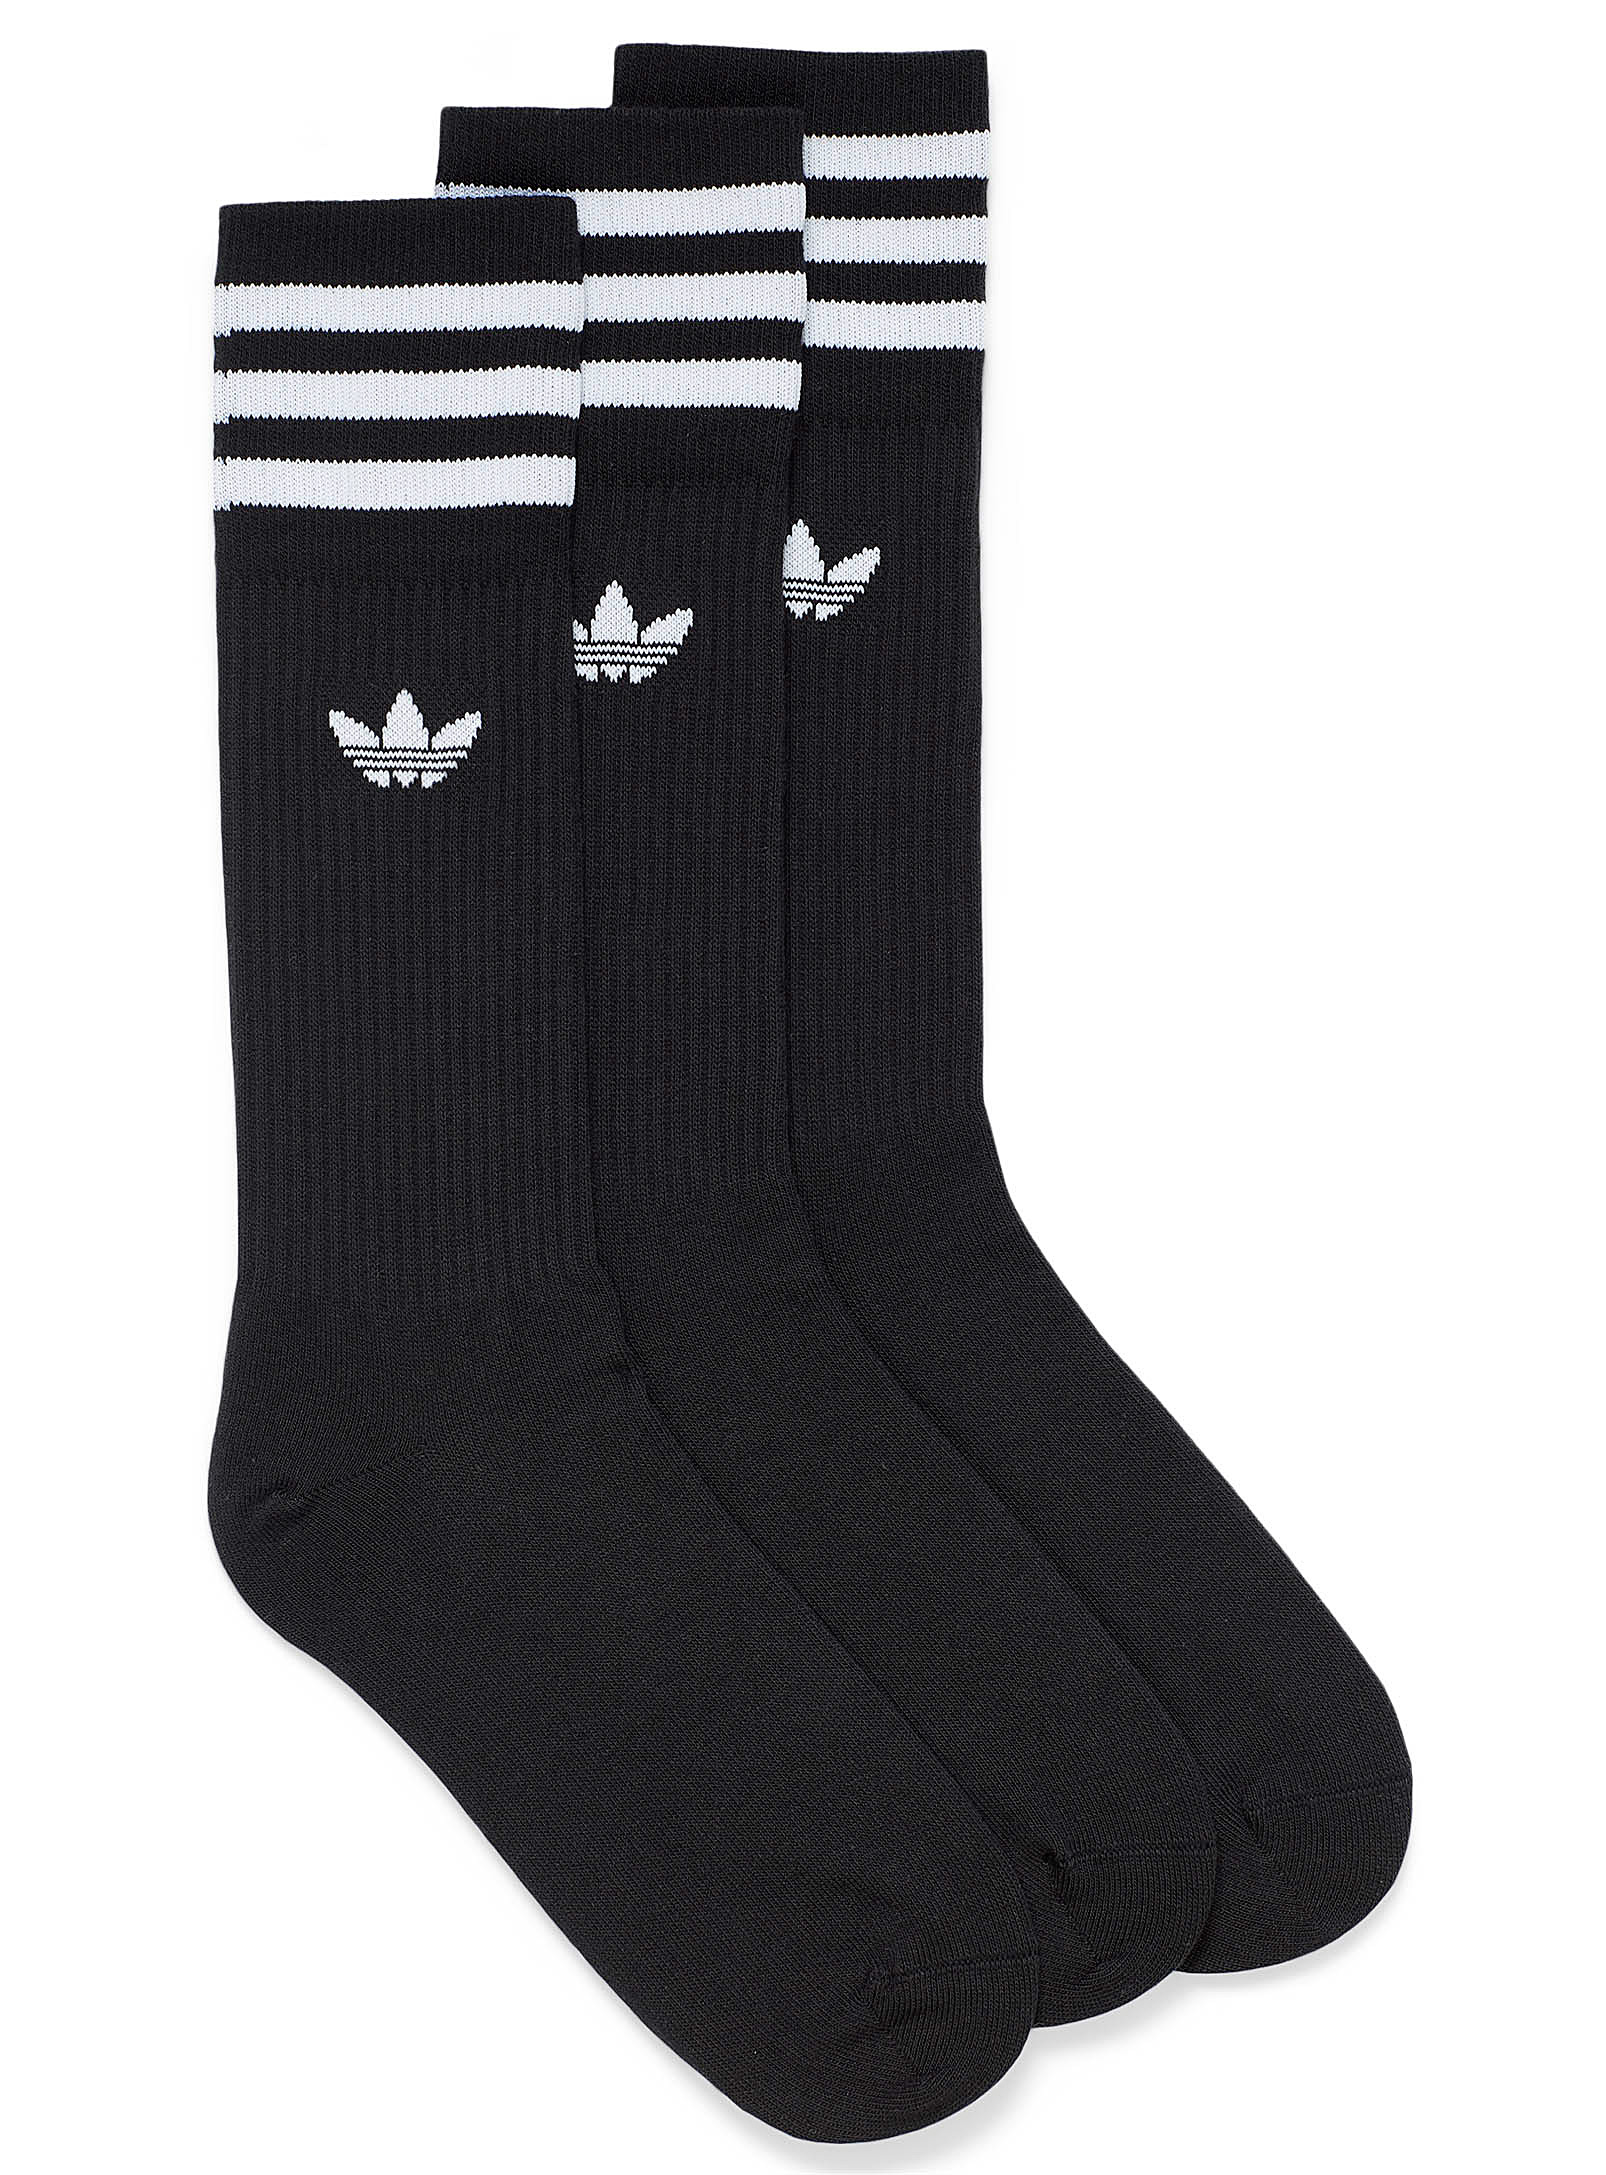 Adidas Originals - Women's Sports socks Set of 3